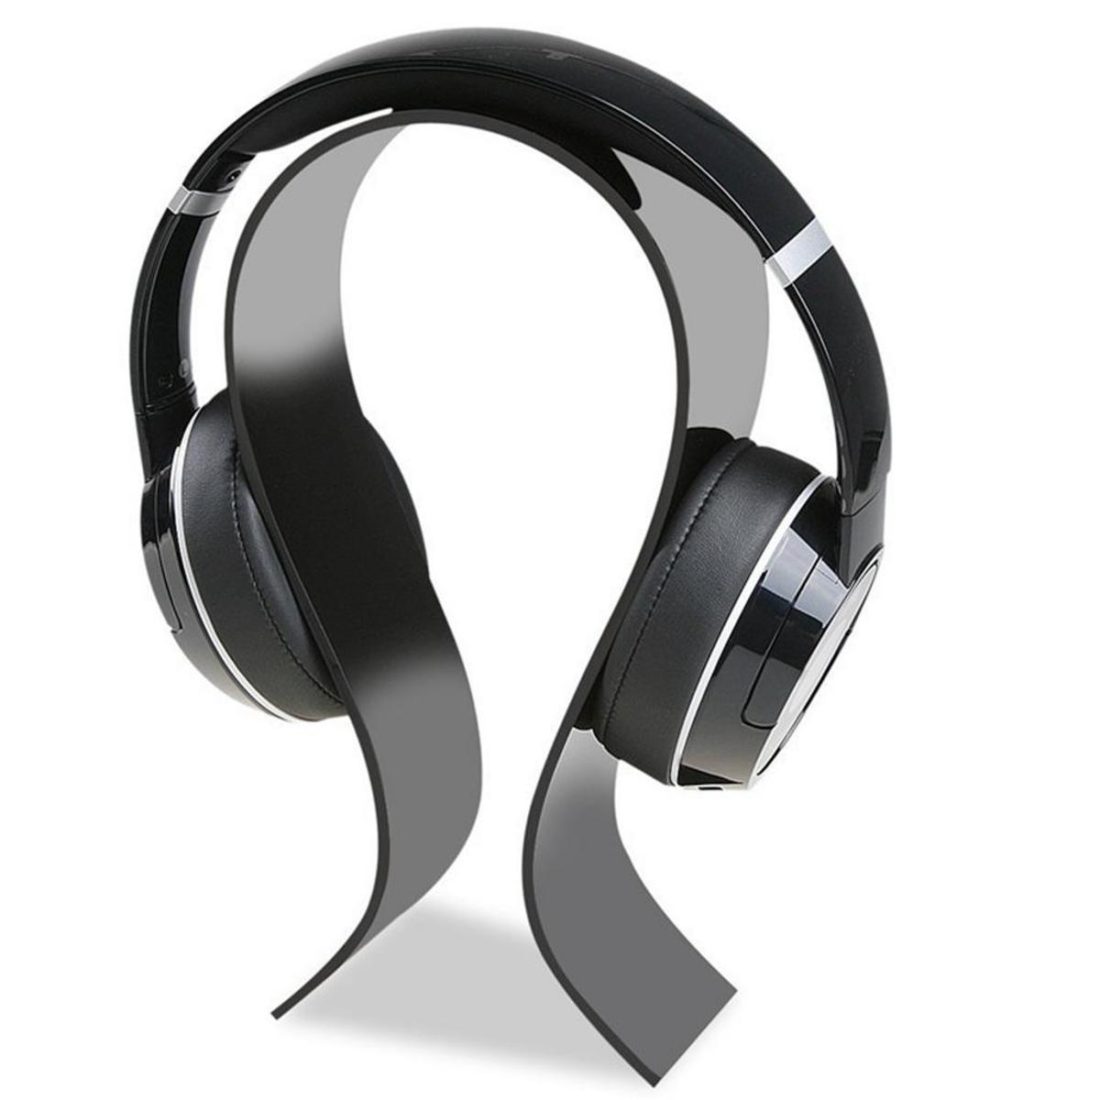 An arch stand holding a pair of black headphones. (From: Joom.com) https://www.joom.com/en/products/5f0e0fc4ca6c350106b1498b